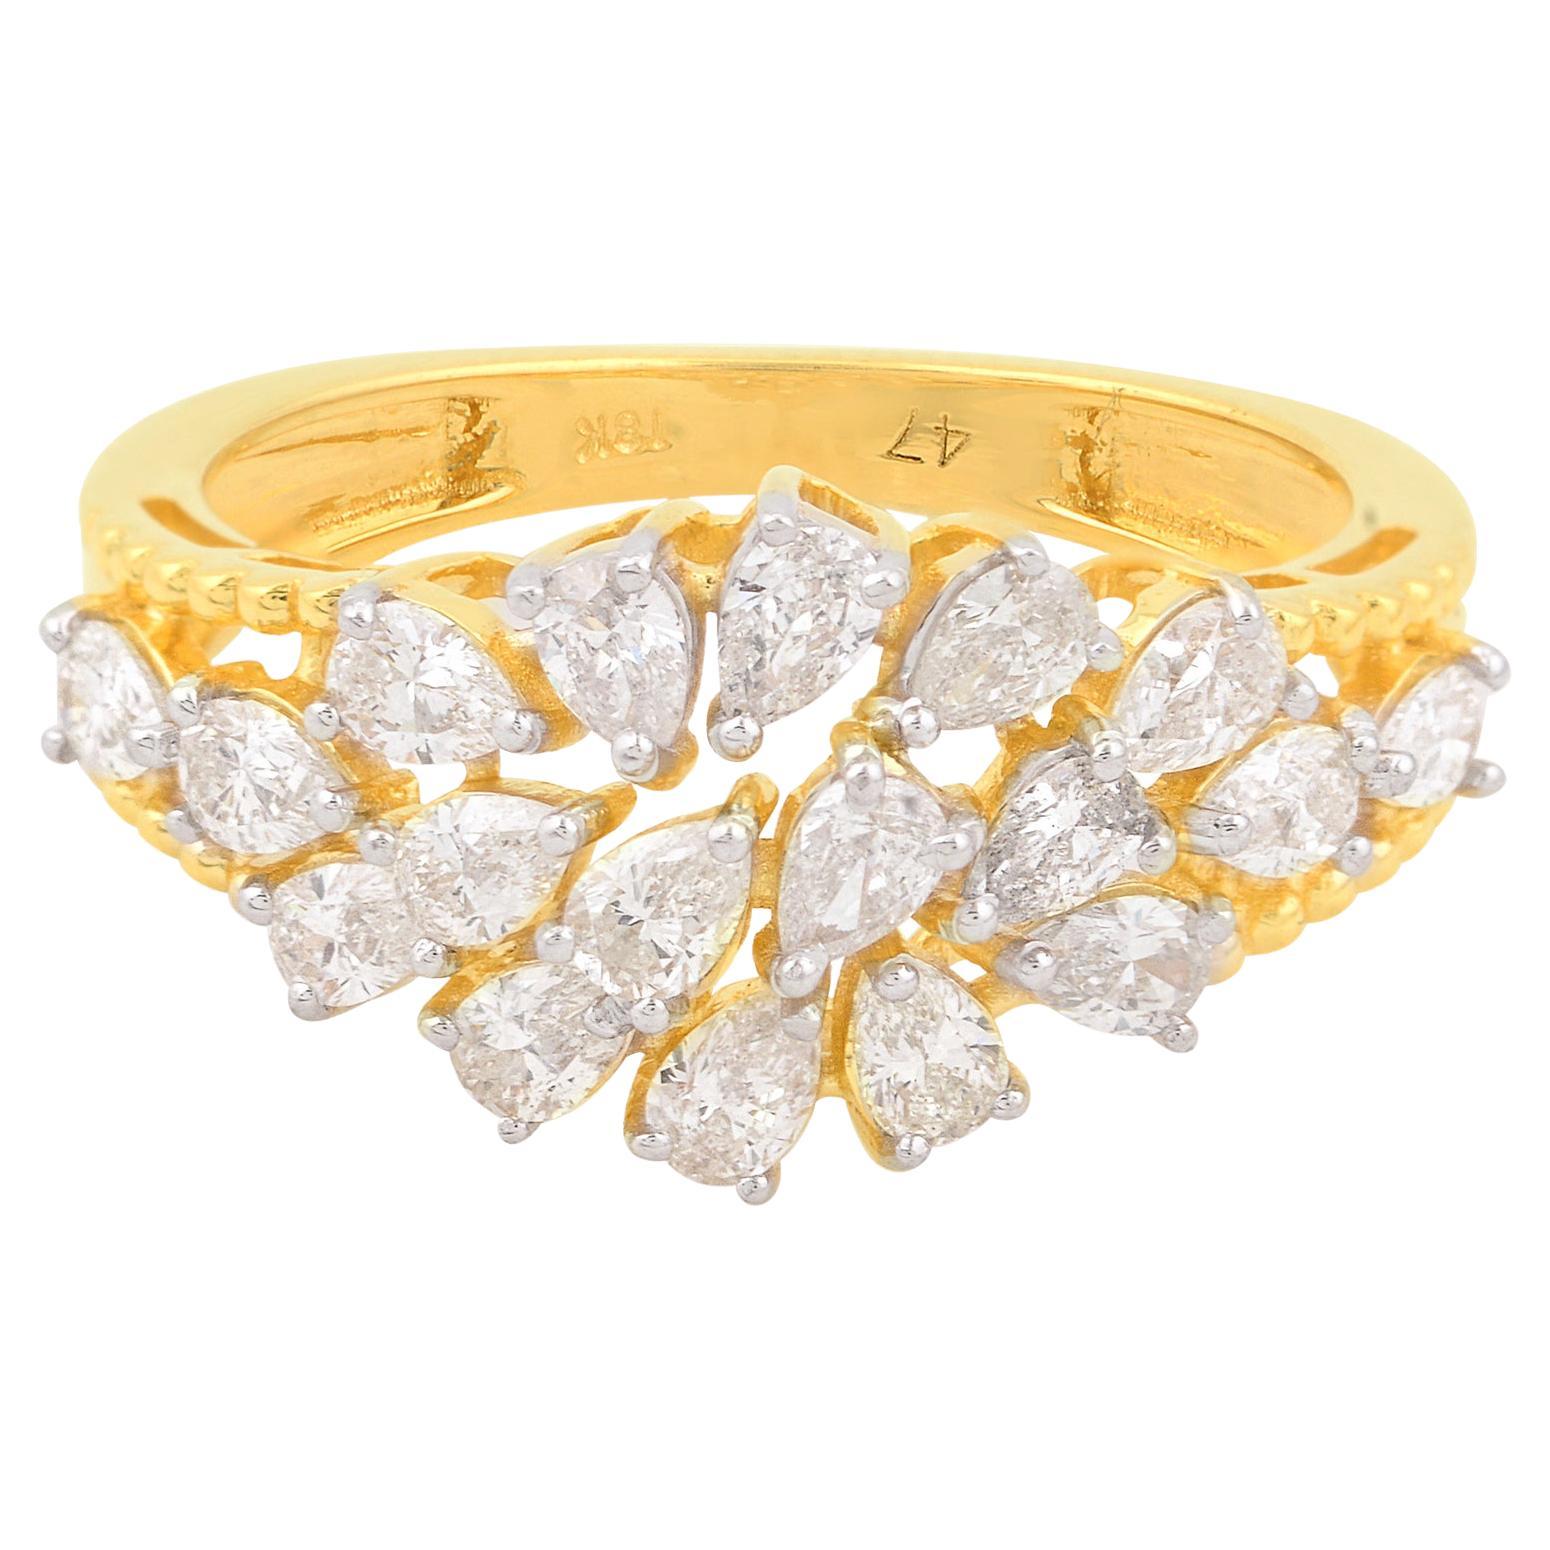 1.35 Carat Pear Diamond Cocktail Ring 18 Karat Yellow Gold Handmade Fine Jewelry For Sale